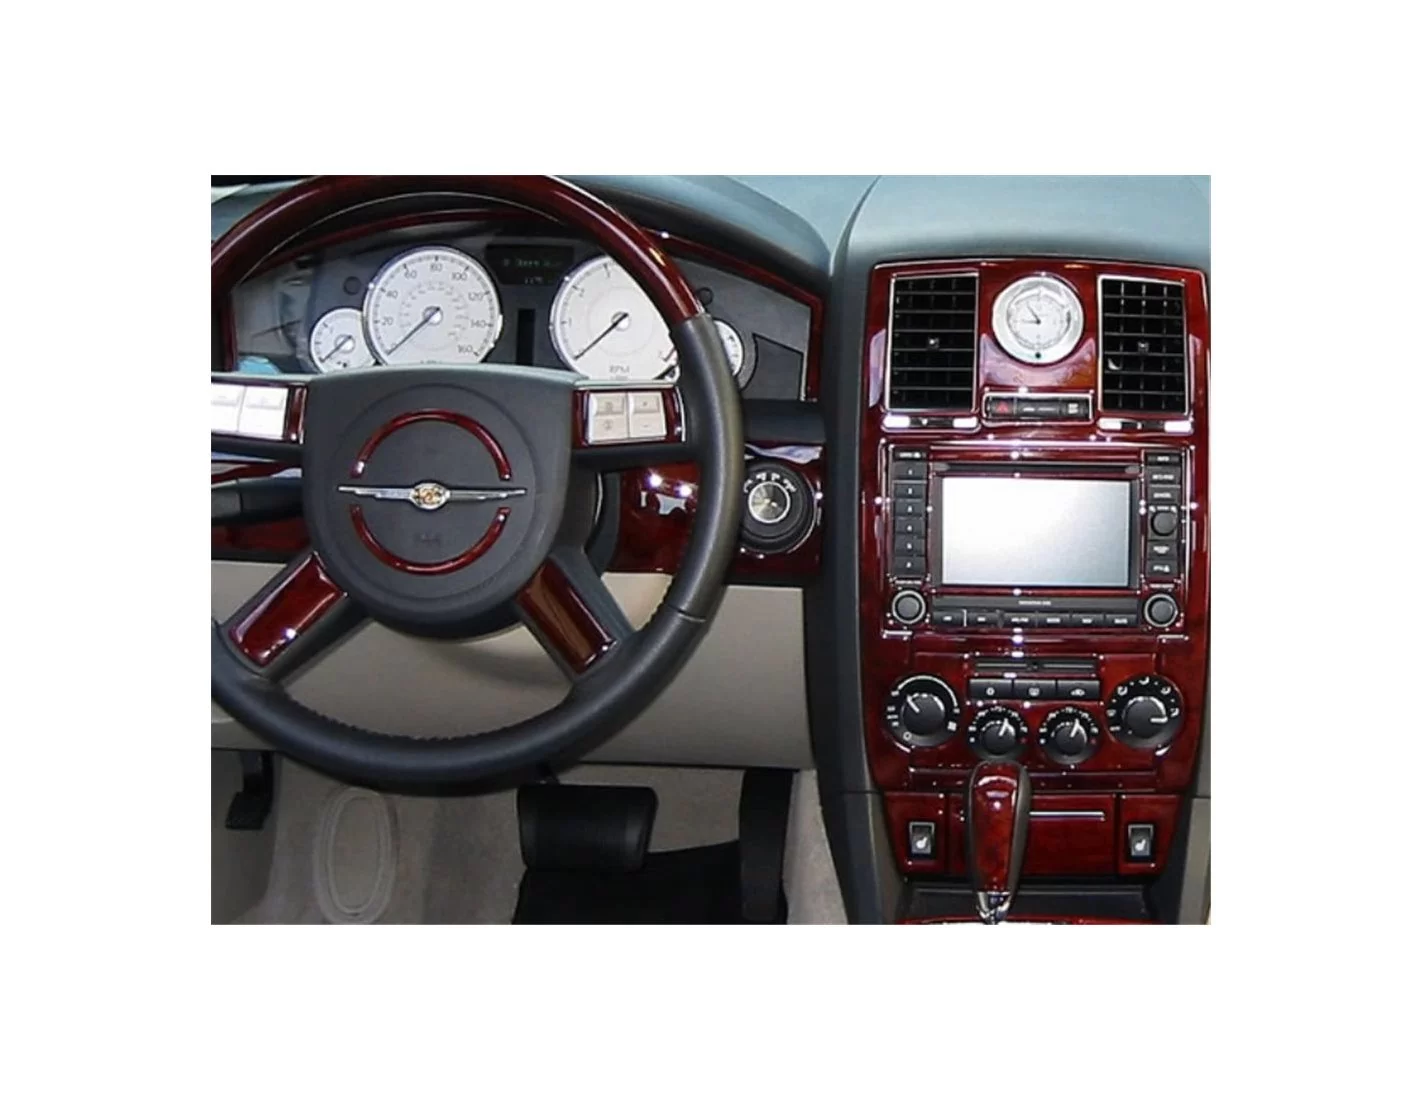 Chrysler PT Cruiser 2006-2010 Mittelkonsole Armaturendekor Cockpit Dekor 43-Teile